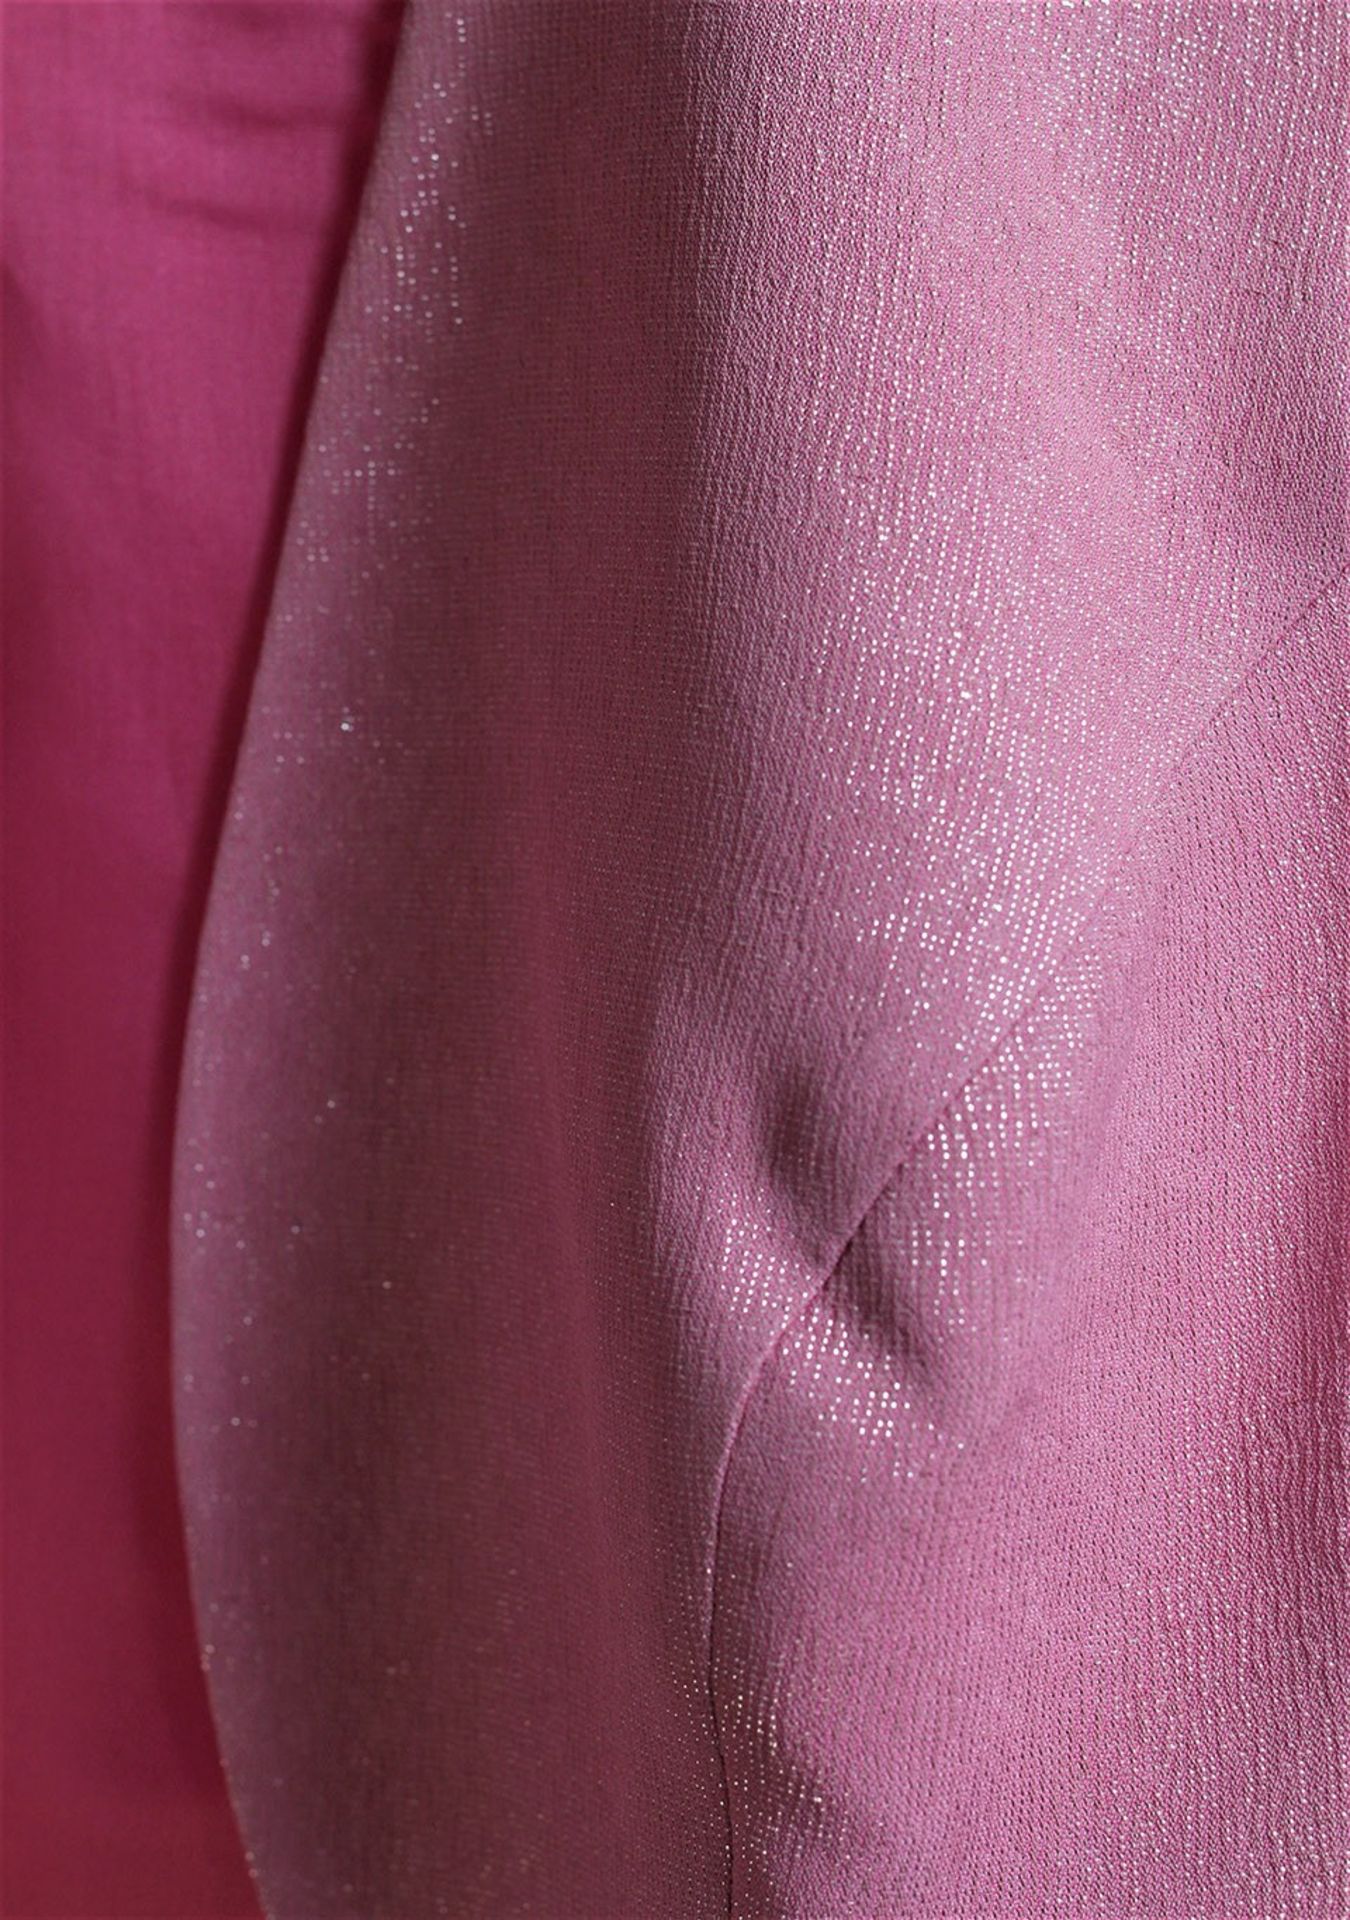 1 x Boutique Le Duc Pink Waistcoat - Size: L - Material: 49% Cotton, 40% Acetate, 11% Poly metal - Image 5 of 7